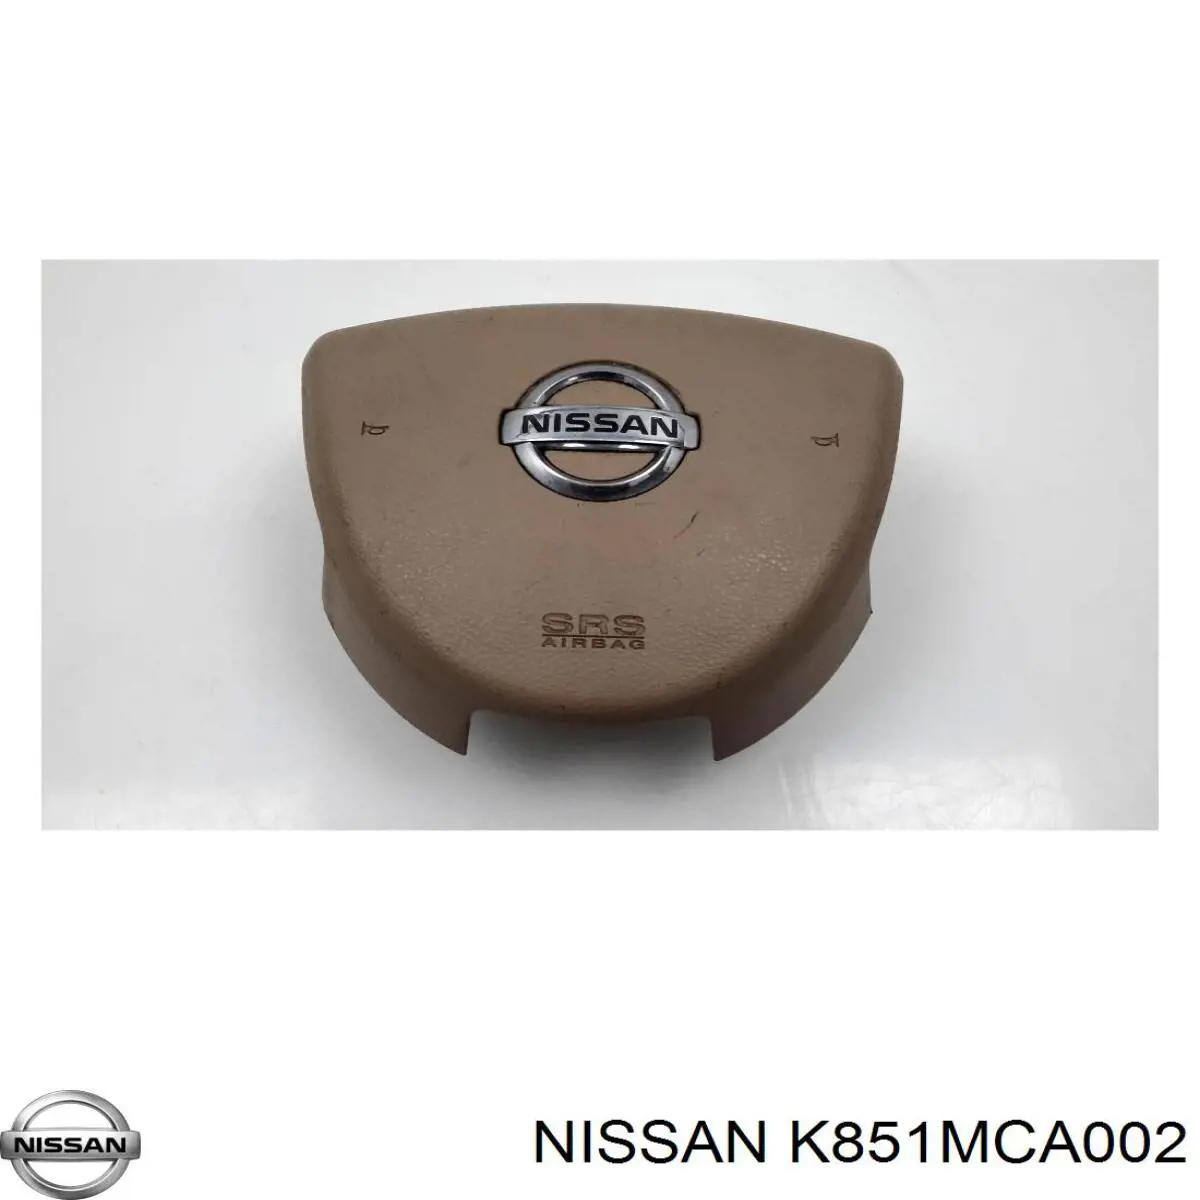 K851MCA002 Nissan airbag del conductor